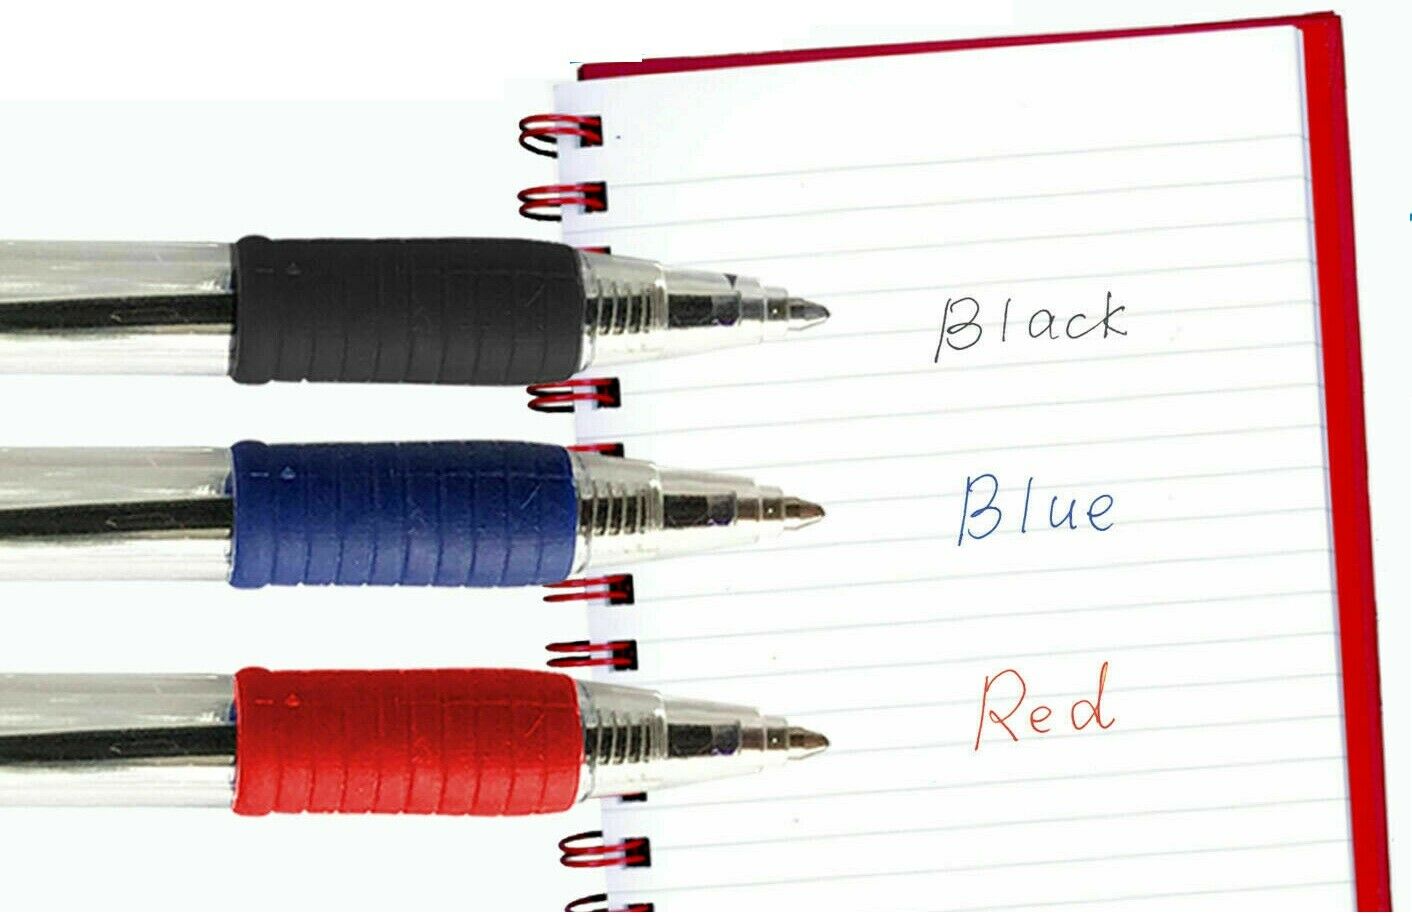 Beclen Harp 8 Ballpoint Pens Blue Black Red Ink Smooth Writing Grip Retractable Pen Biros Home School Office Writing